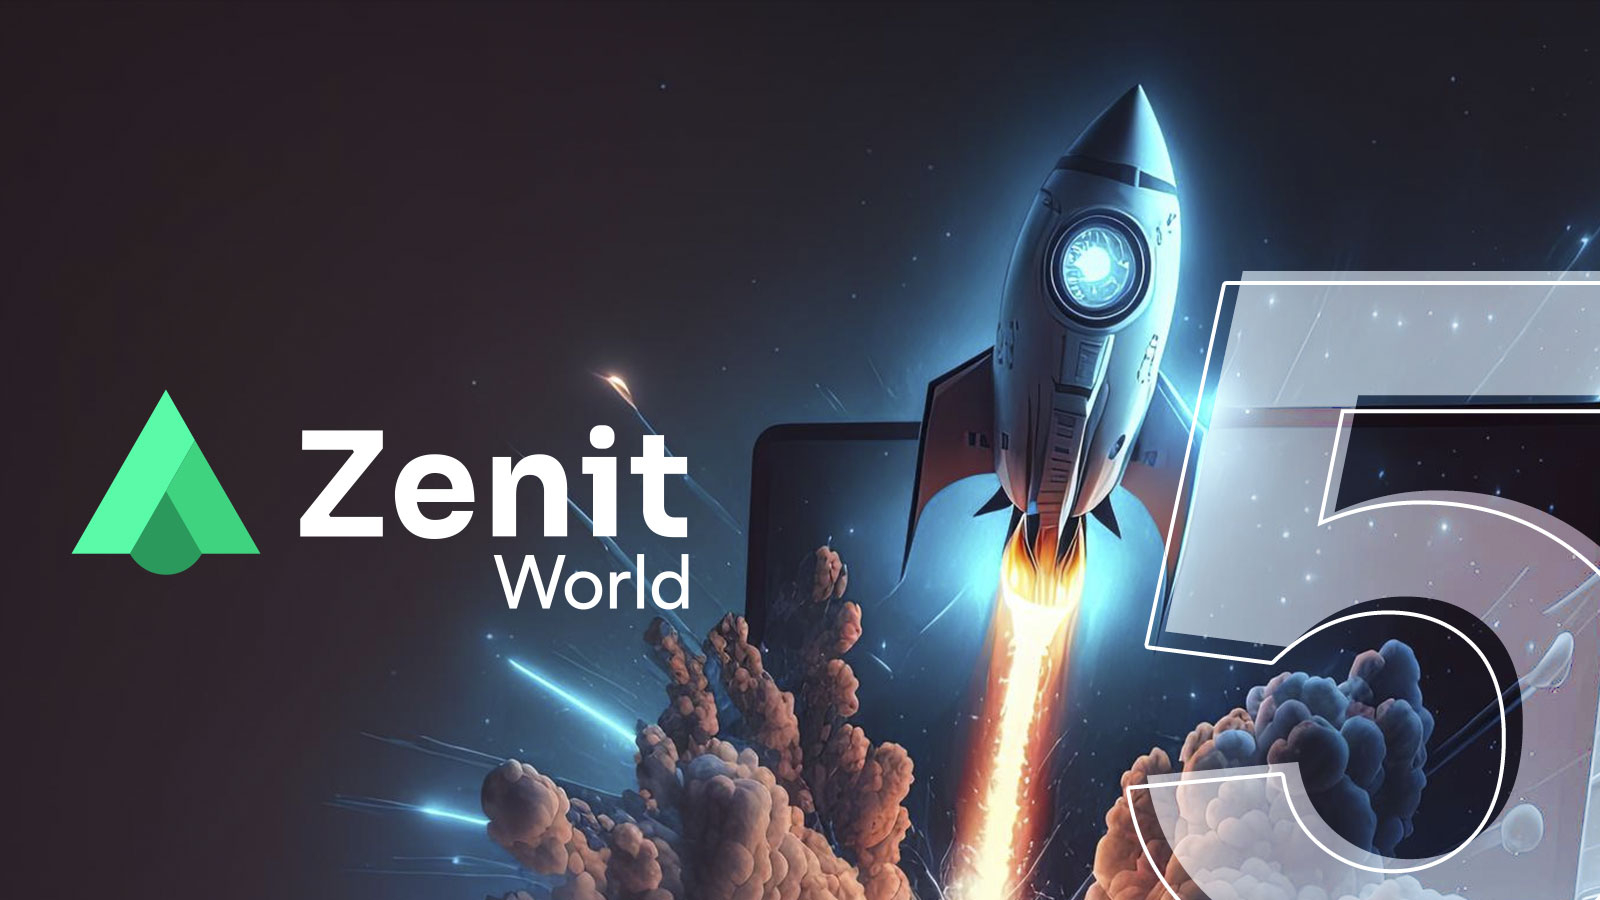 5 User Favorite Features of Zenit World